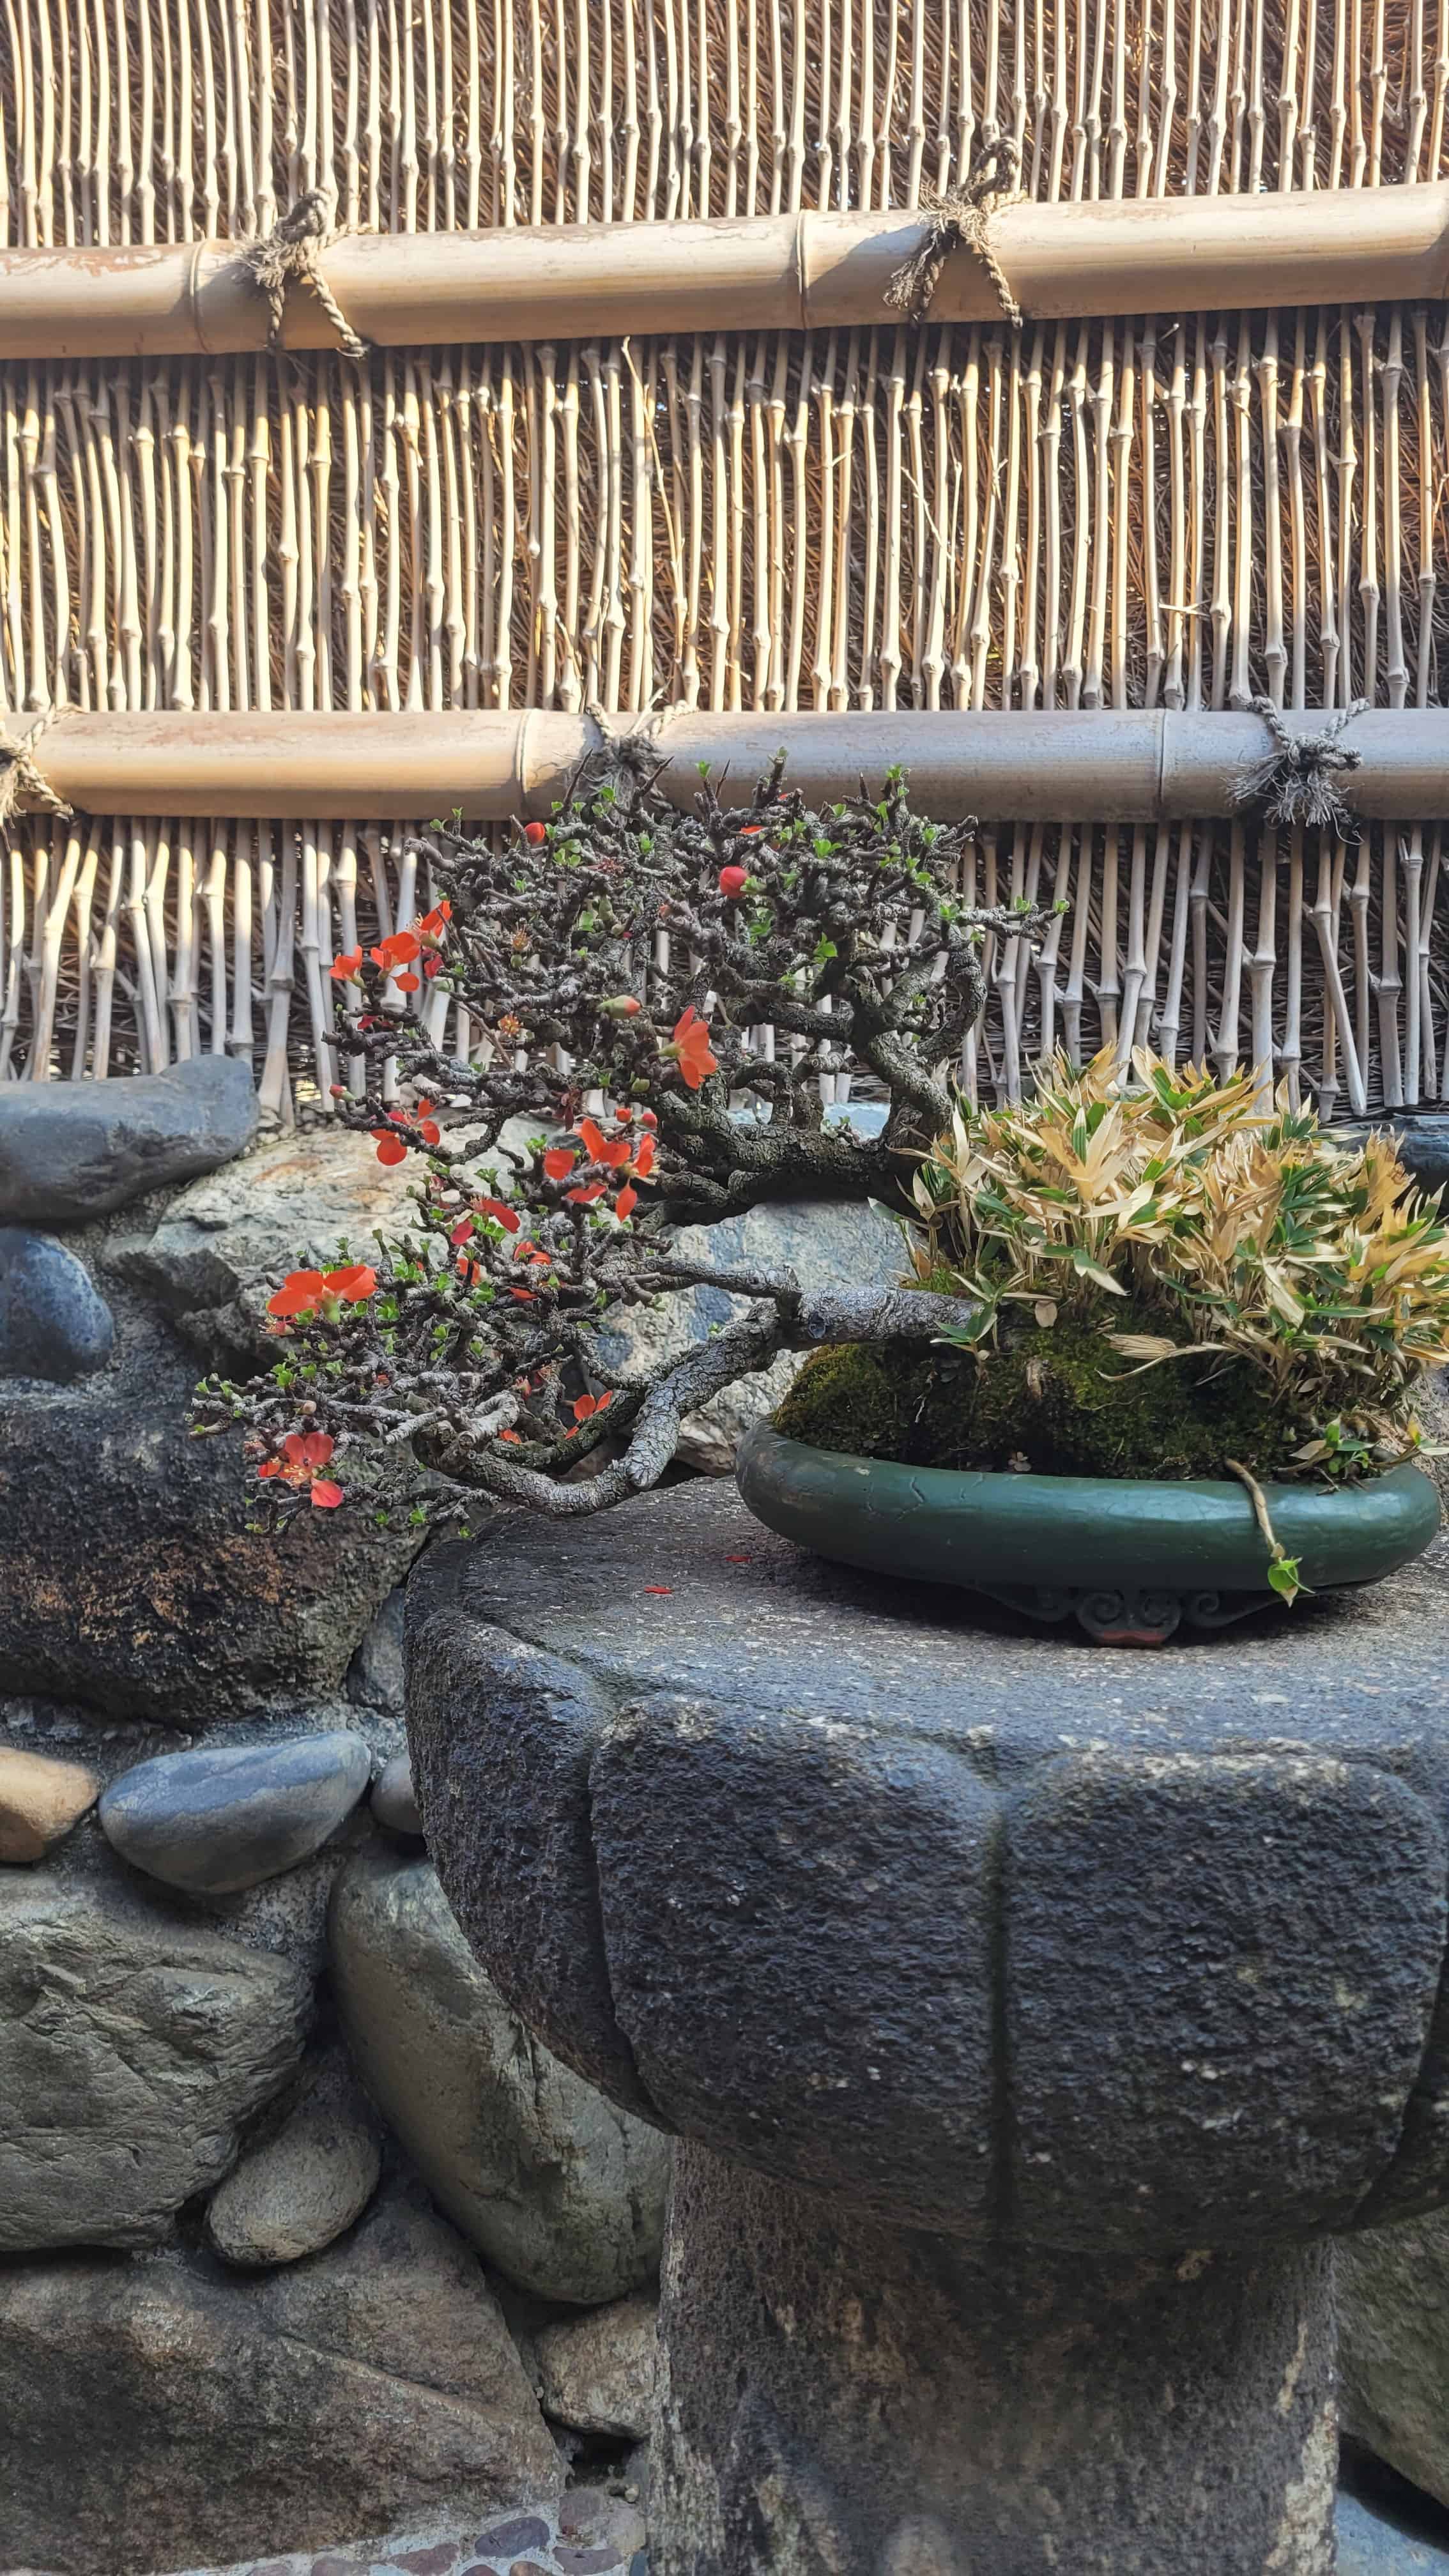 A flower bonsai tree from kobayashi in Japan